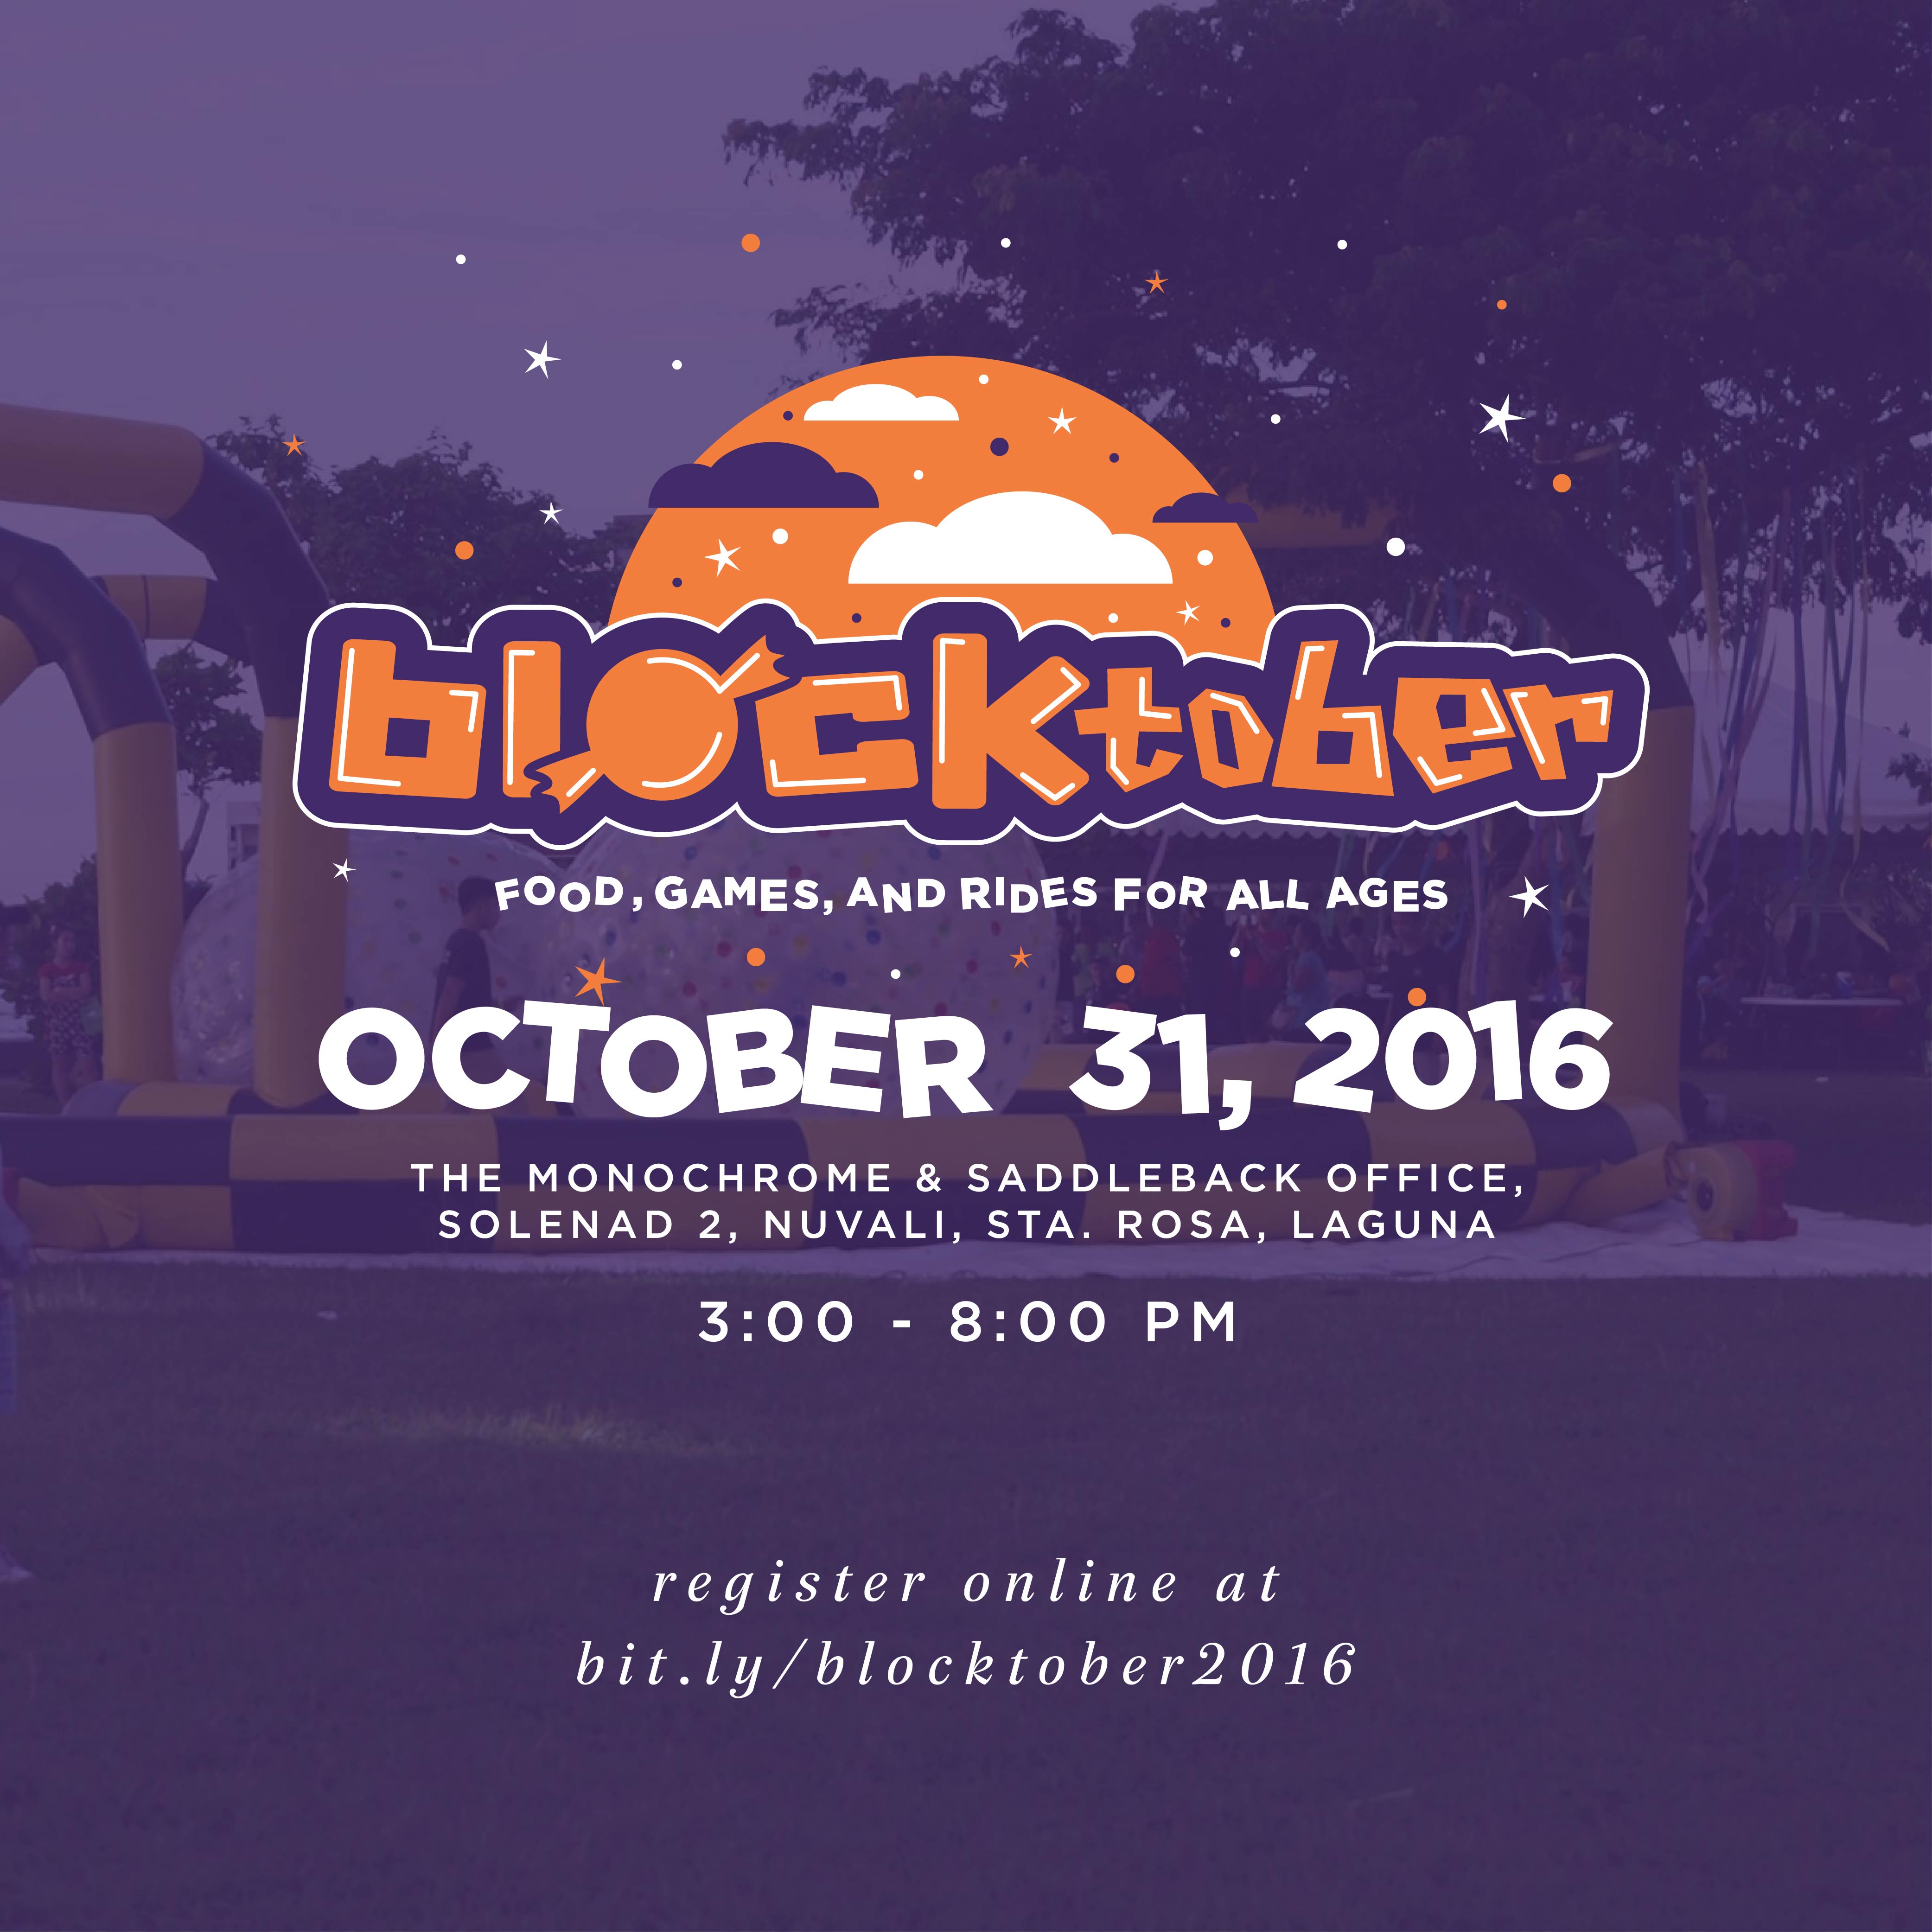 Saddleback’s Blocktober